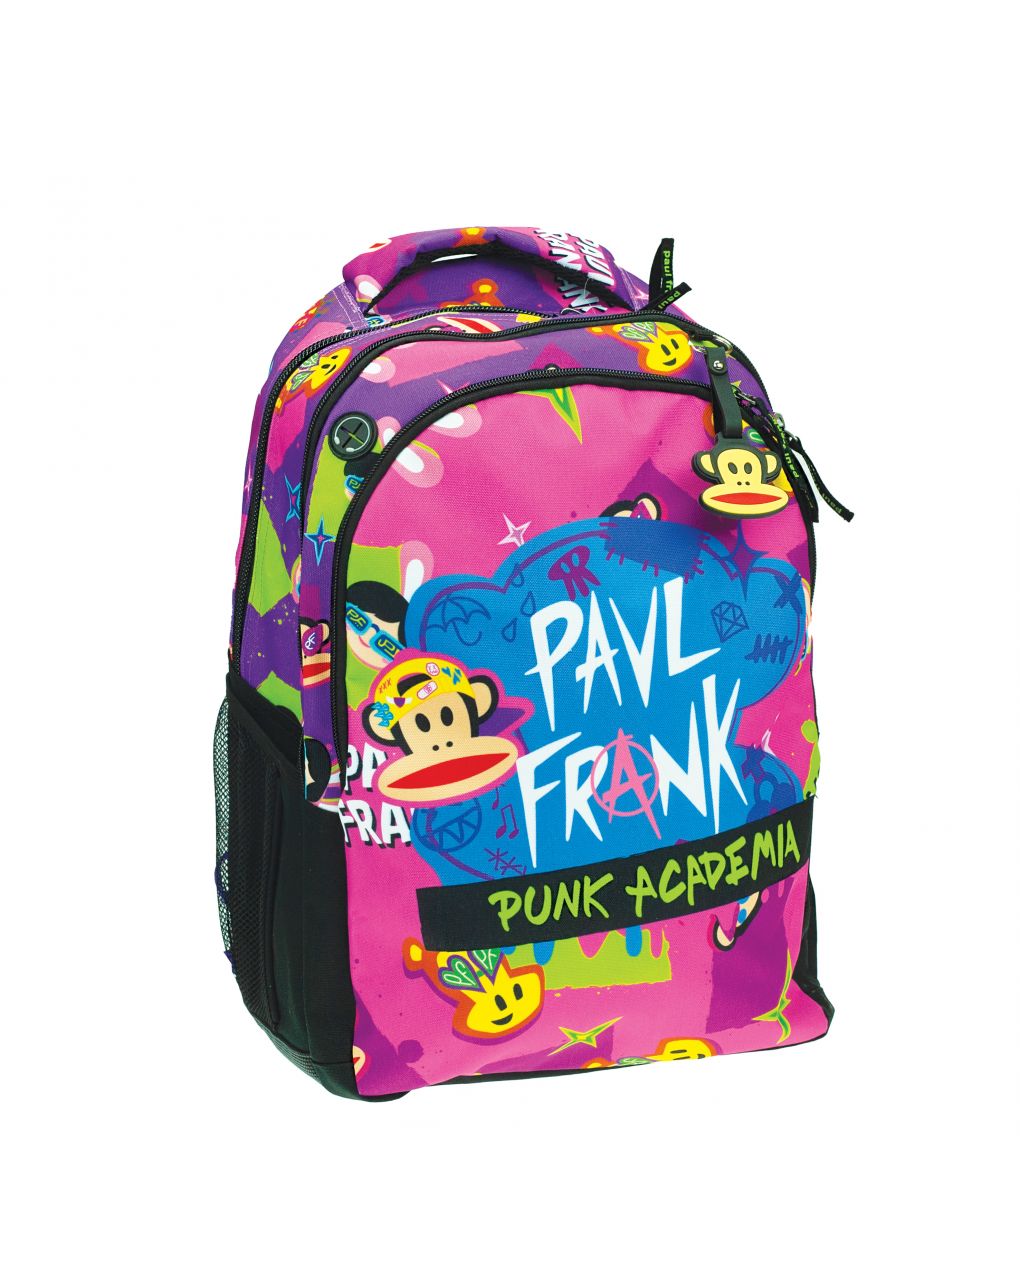 Bmu τσάντα πλάτης οβάλ paul frank punk 346-82031 - PAUL FRANK